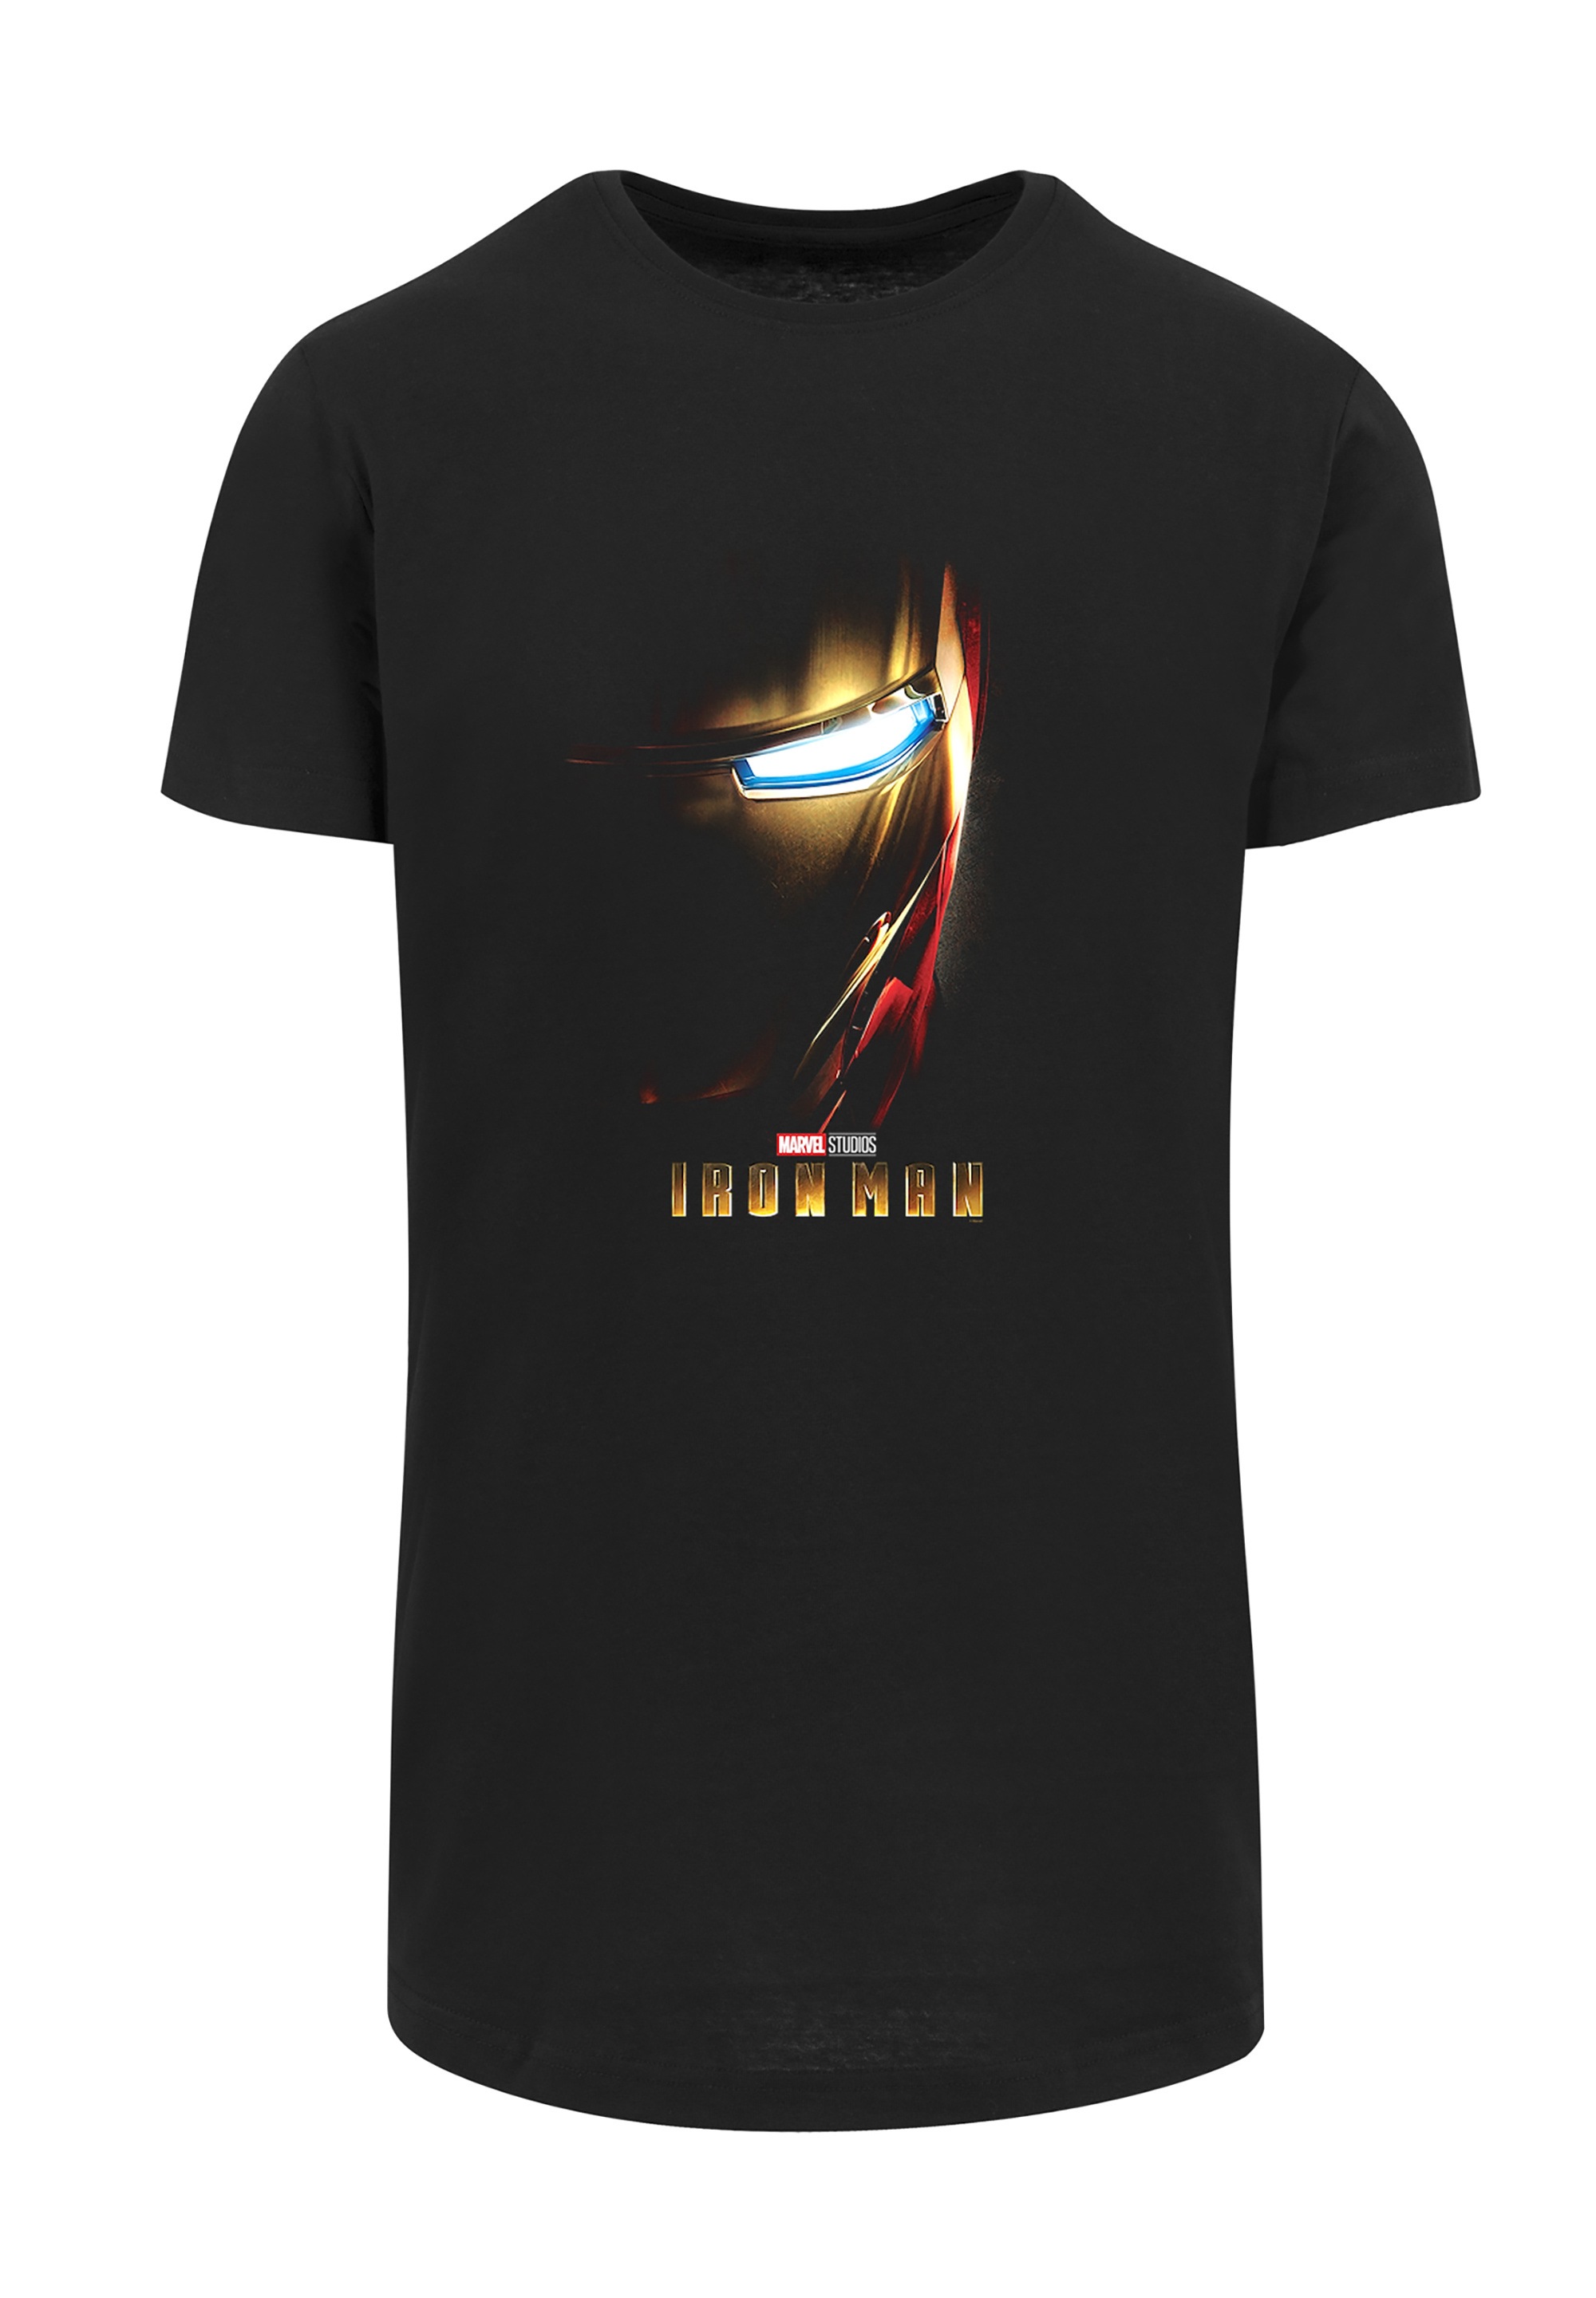 »Marvel Iron Man | F4NT4STIC BAUR Studios T-Shirt Black Poster«, Print Friday